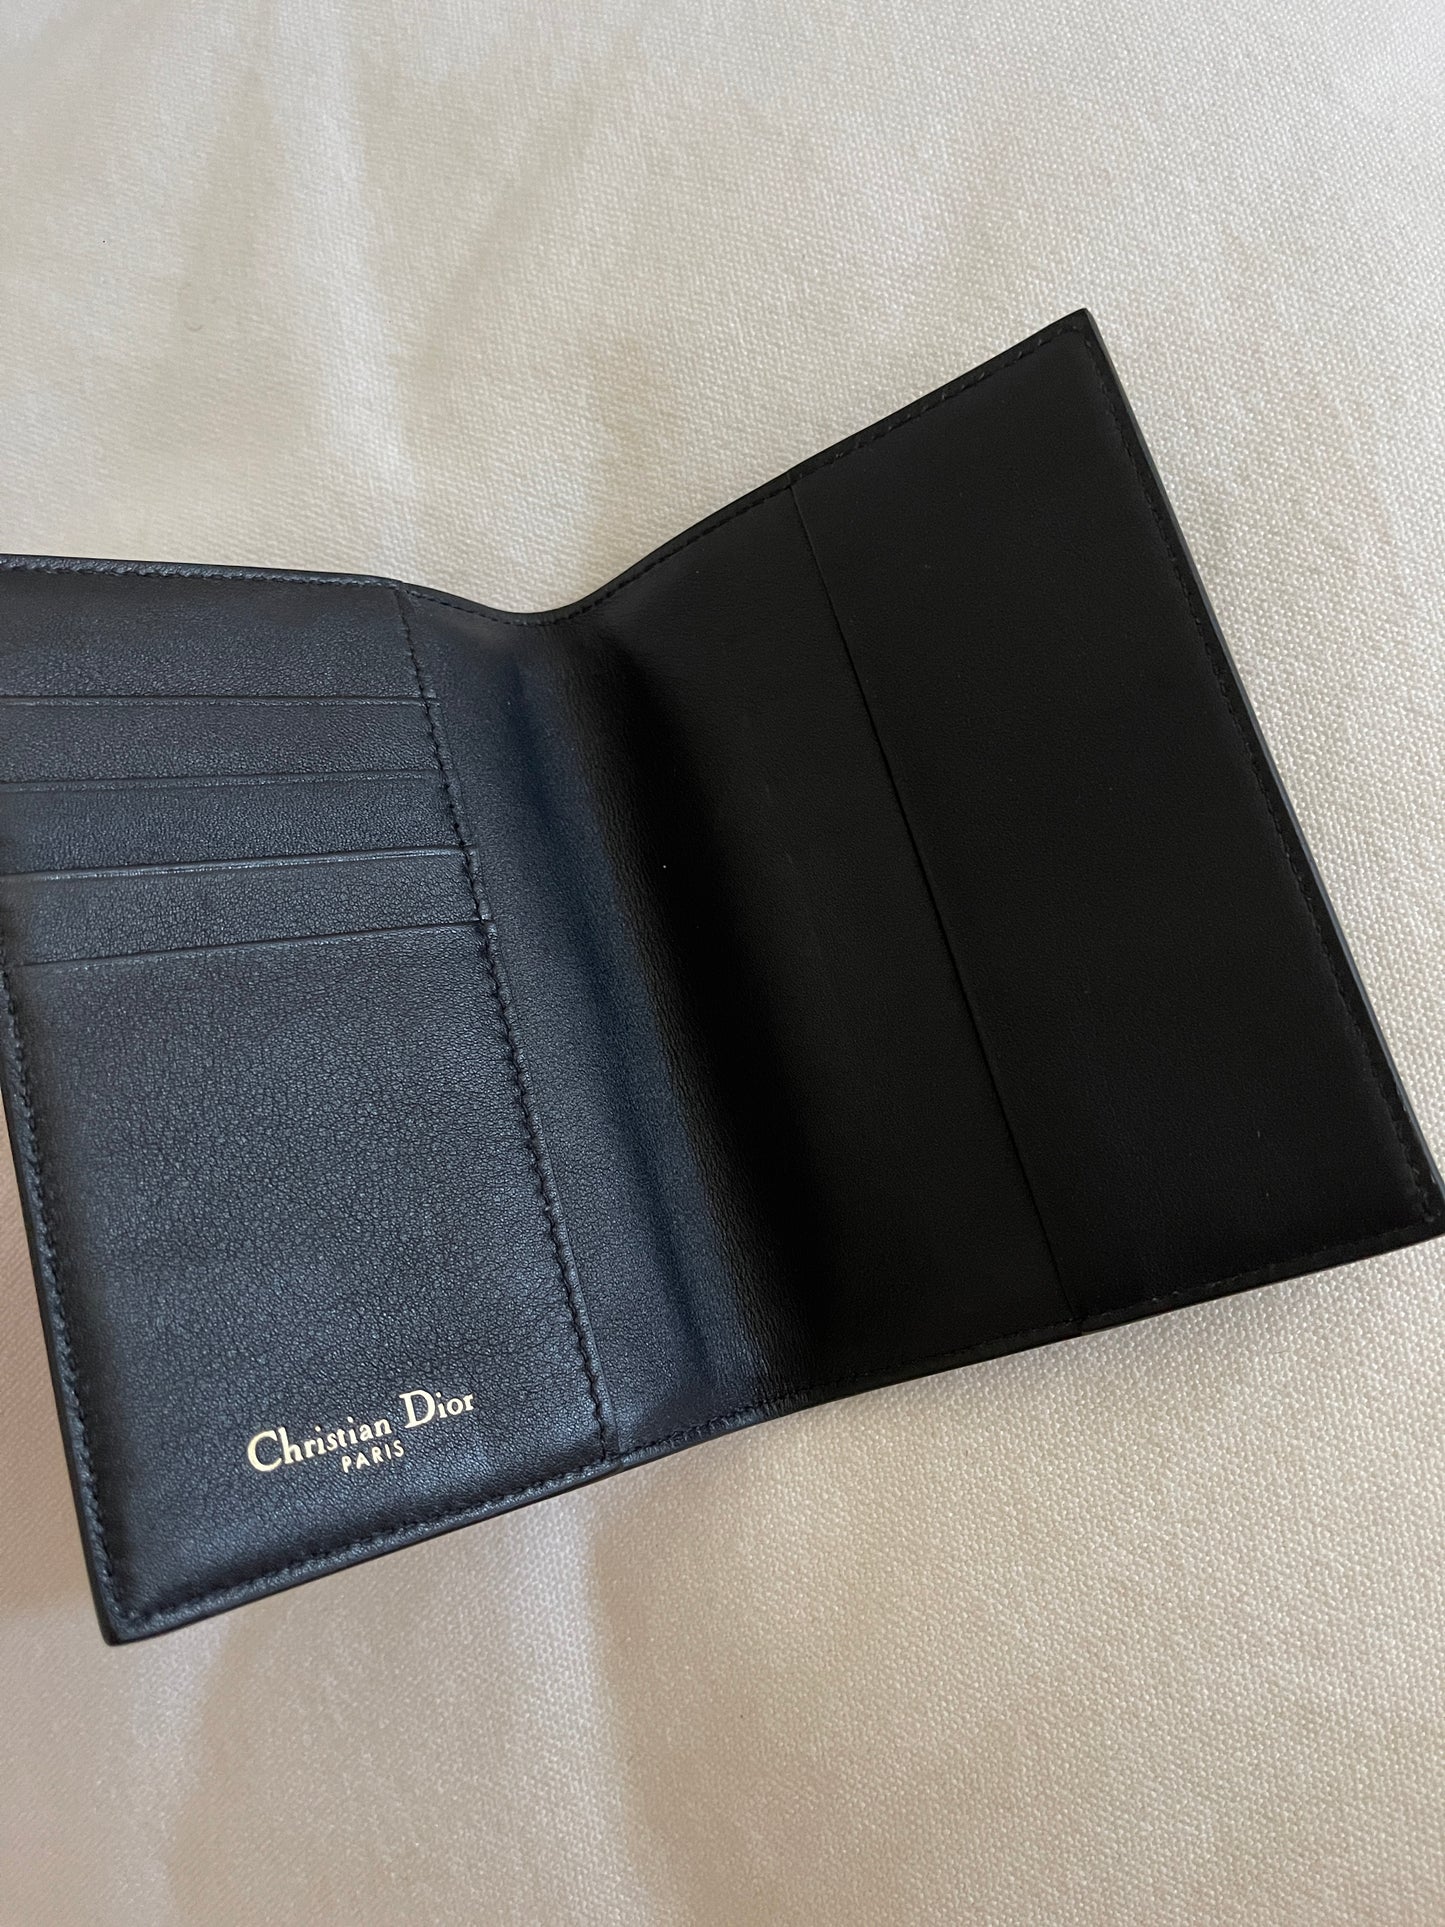 Christian Dior 2021 Oblique Passport Cover - Neutrals Travel